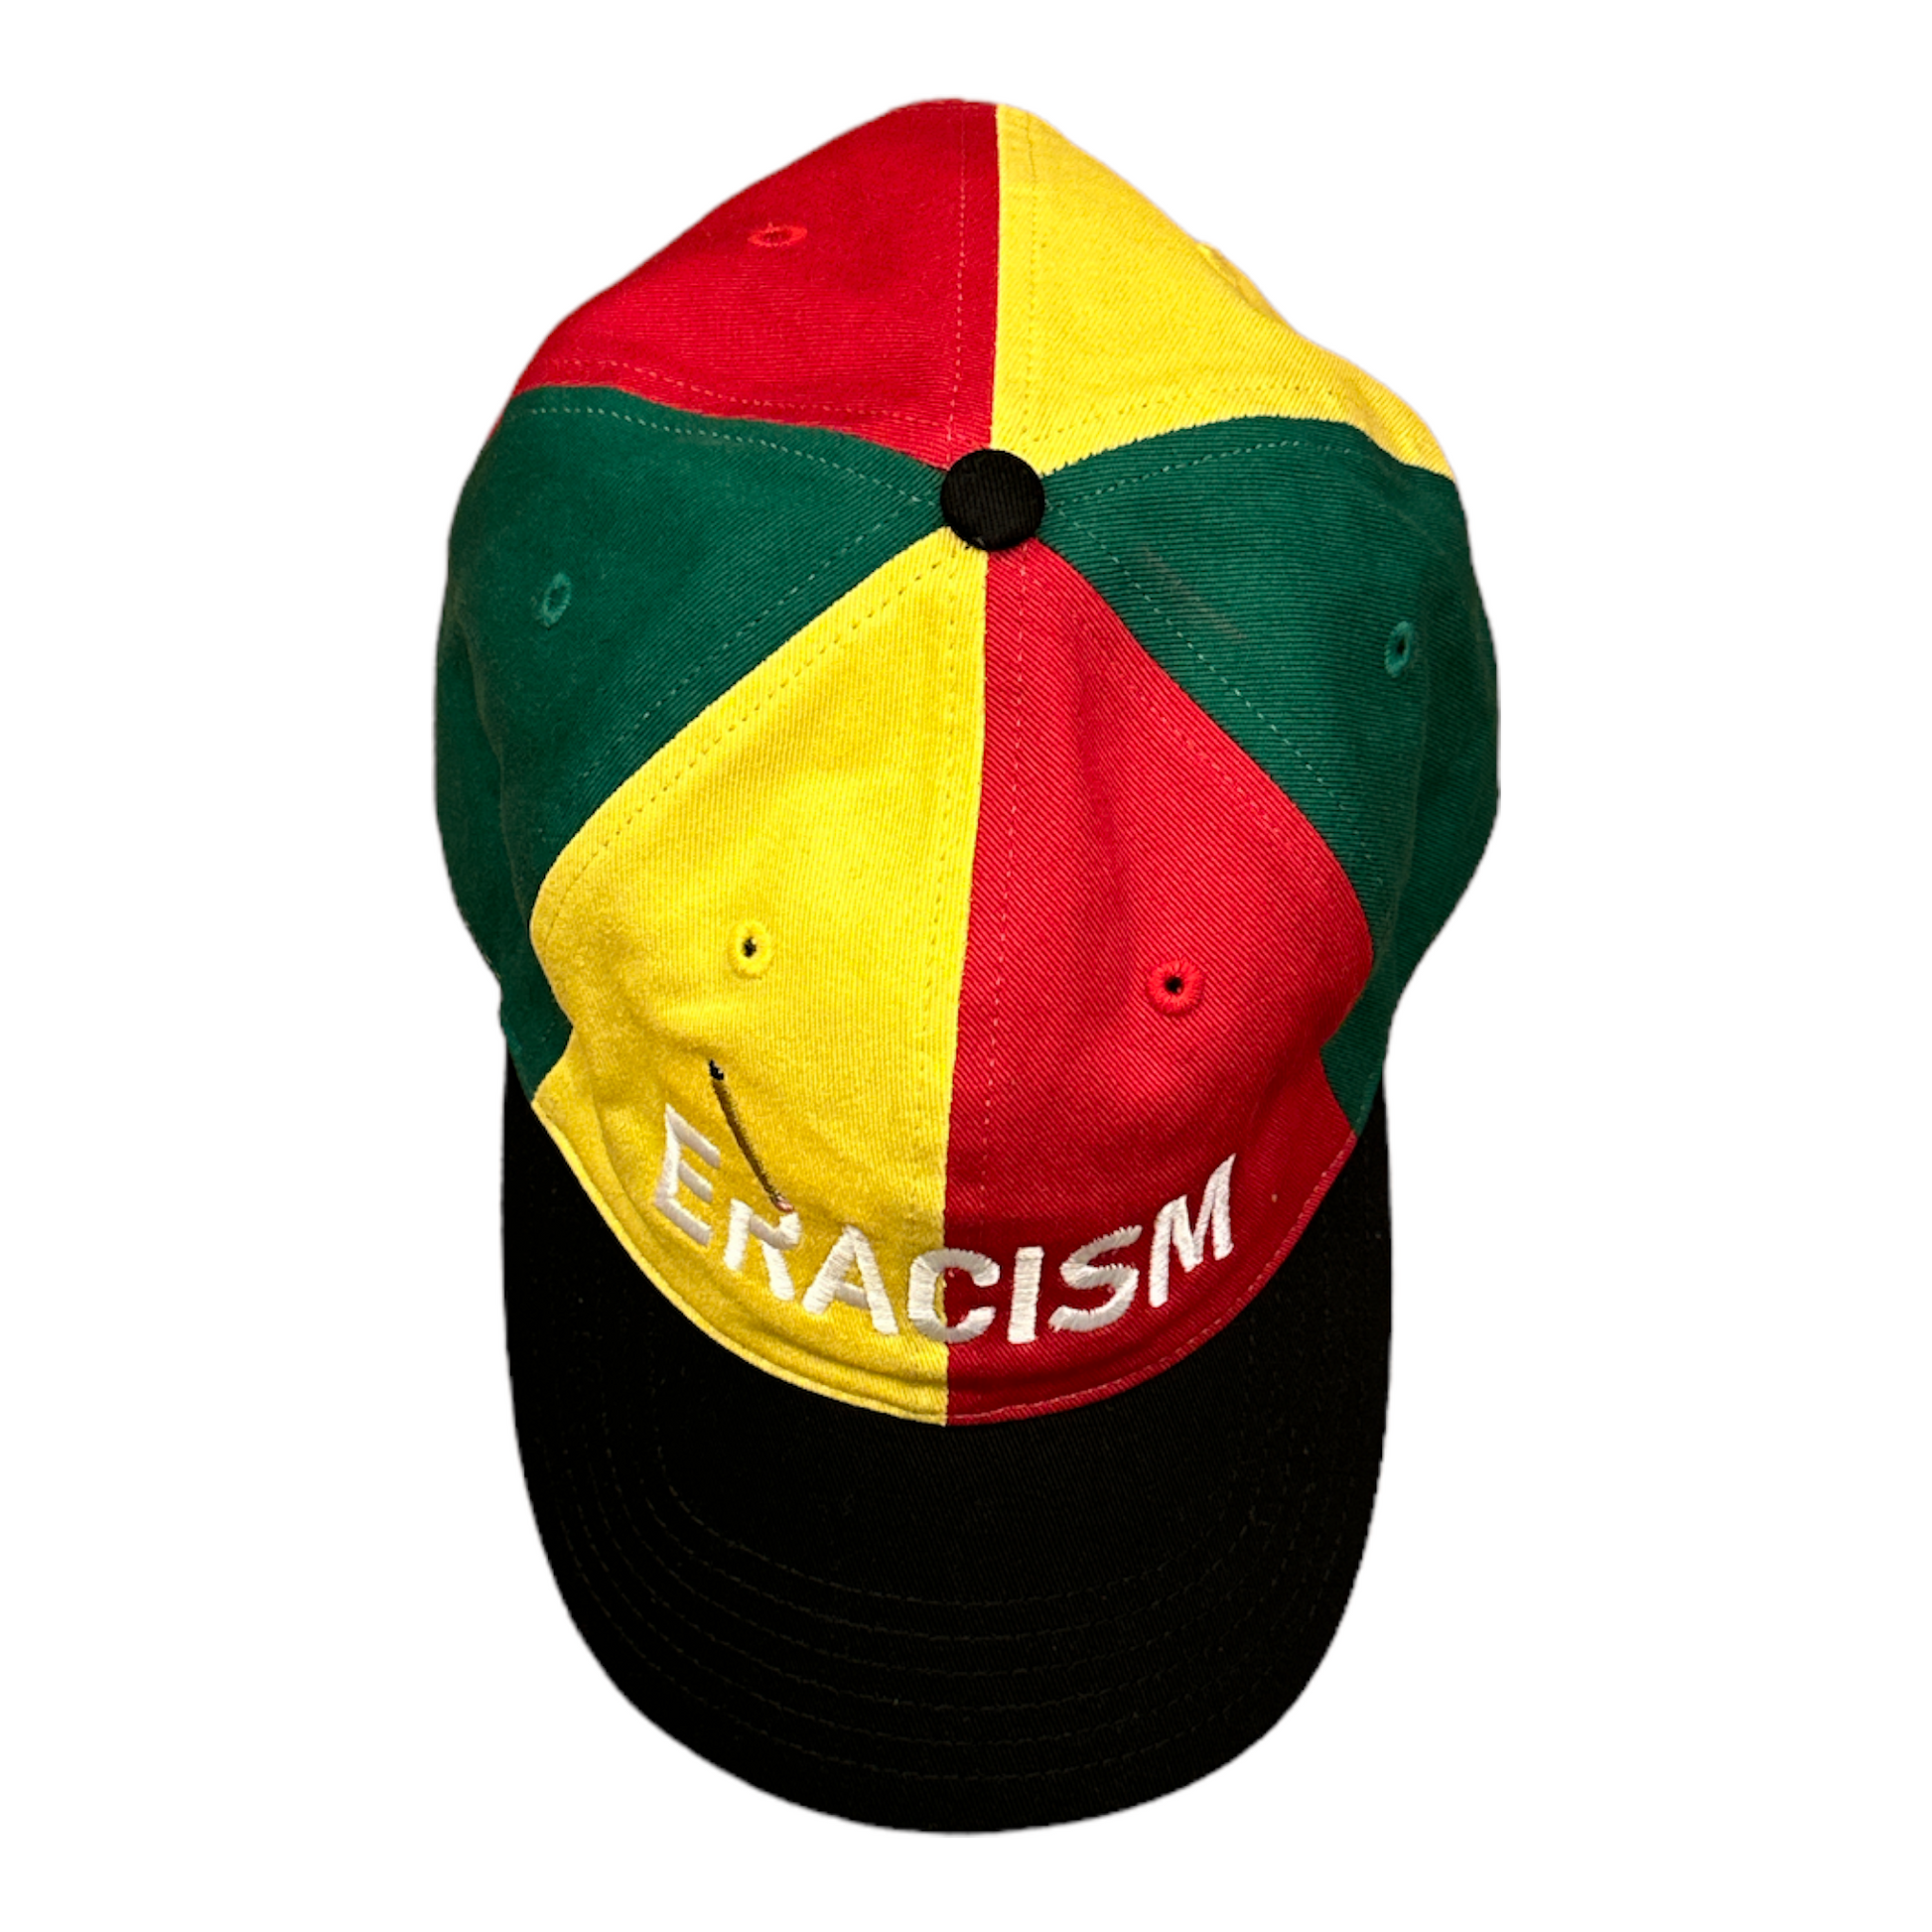 Eracism Hat - Sinners2Saints